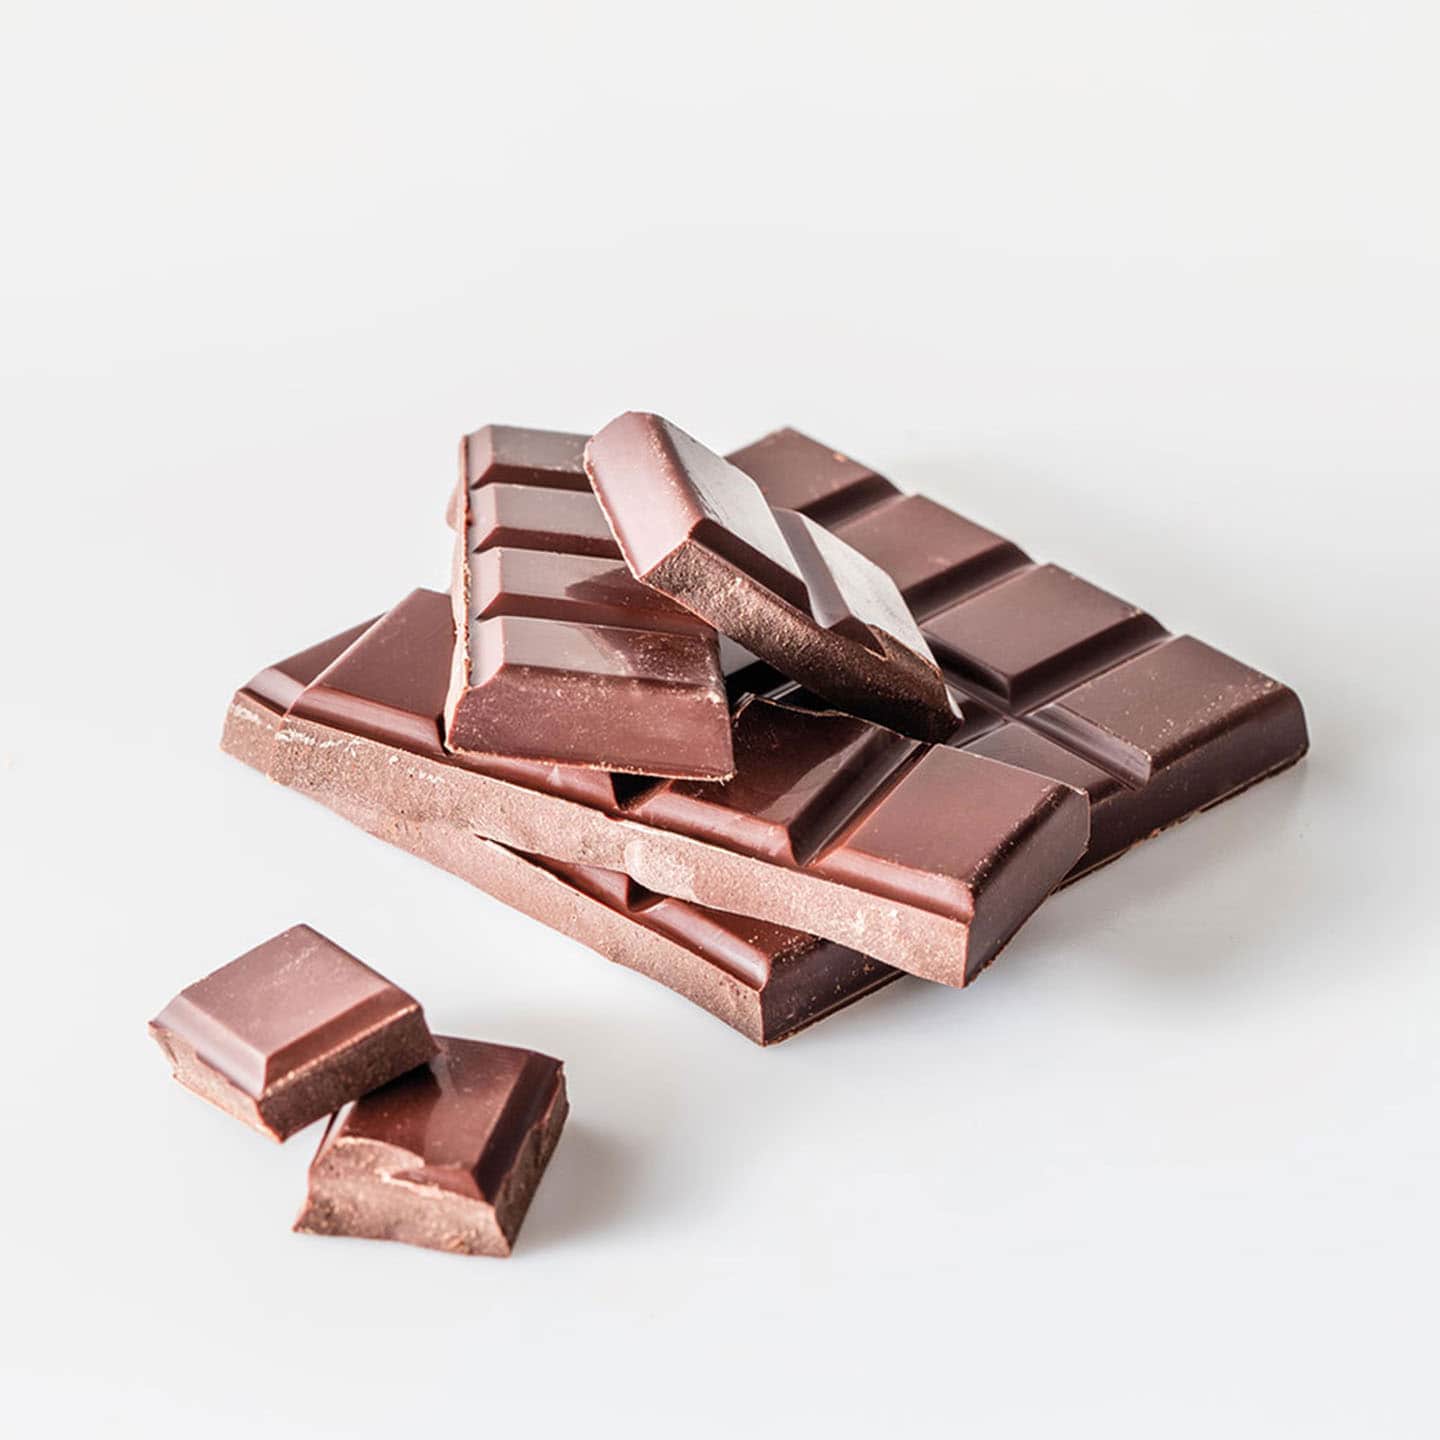 Tablette Chocolat Noir 73% Grand Cru origine Guatemala 100g